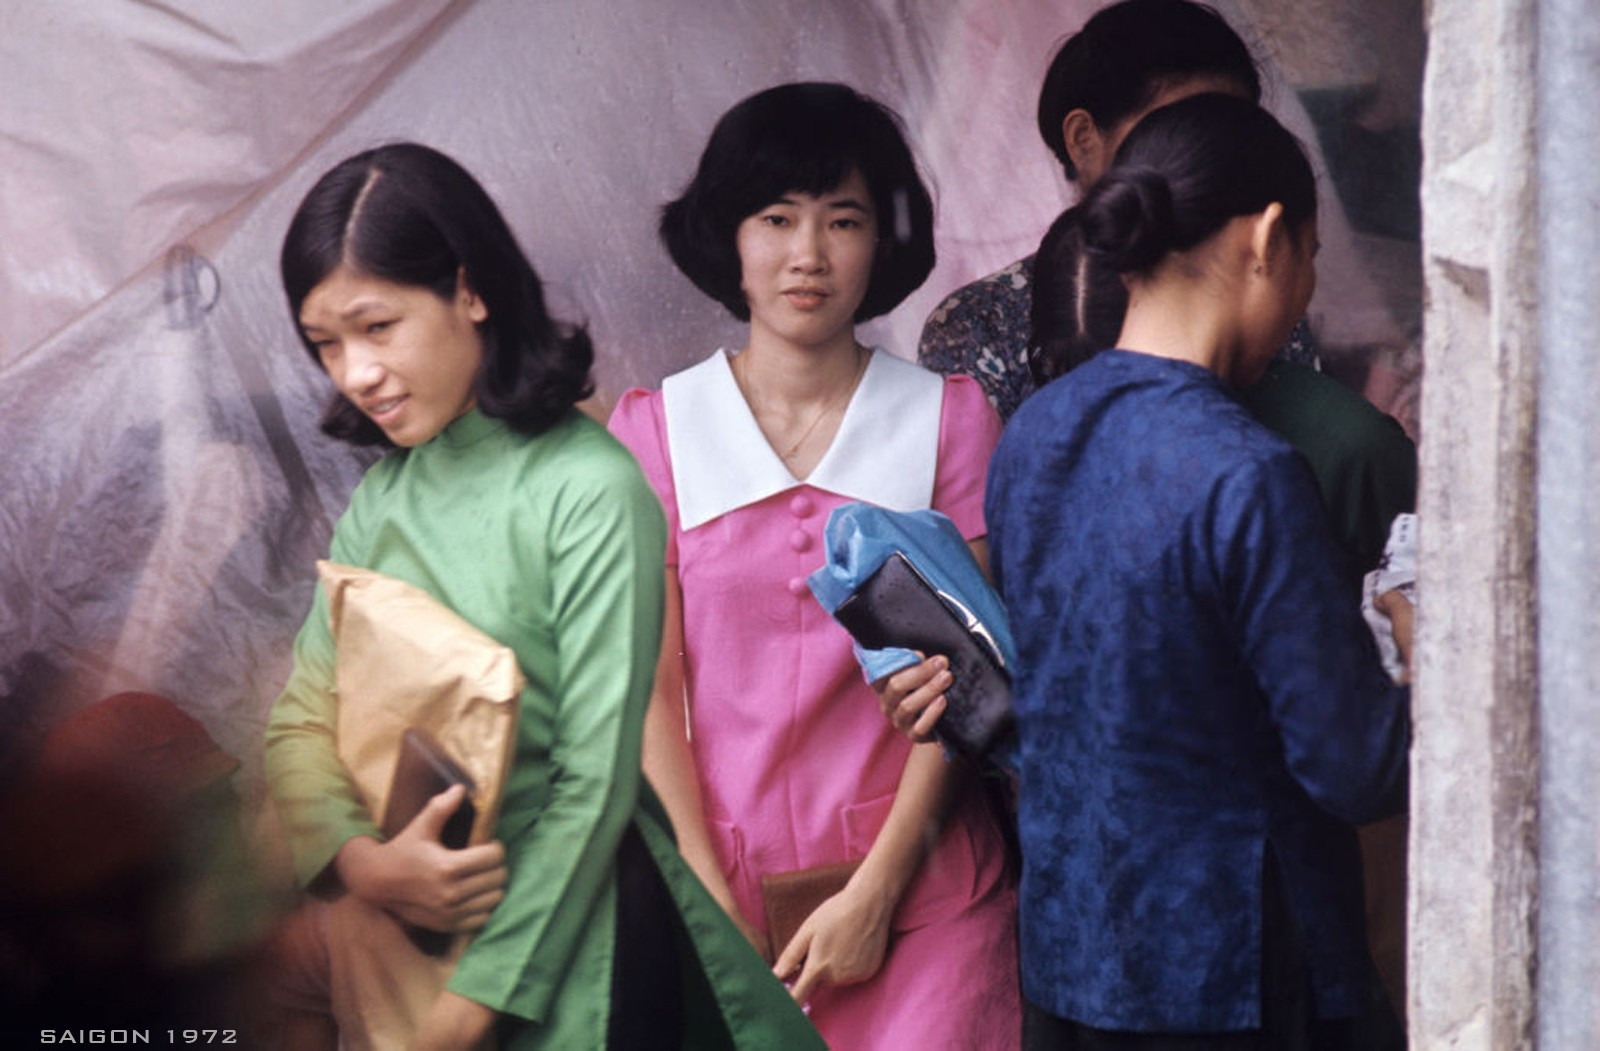 Interesting photos of Saigon women in 1972 under US photographer’s lens